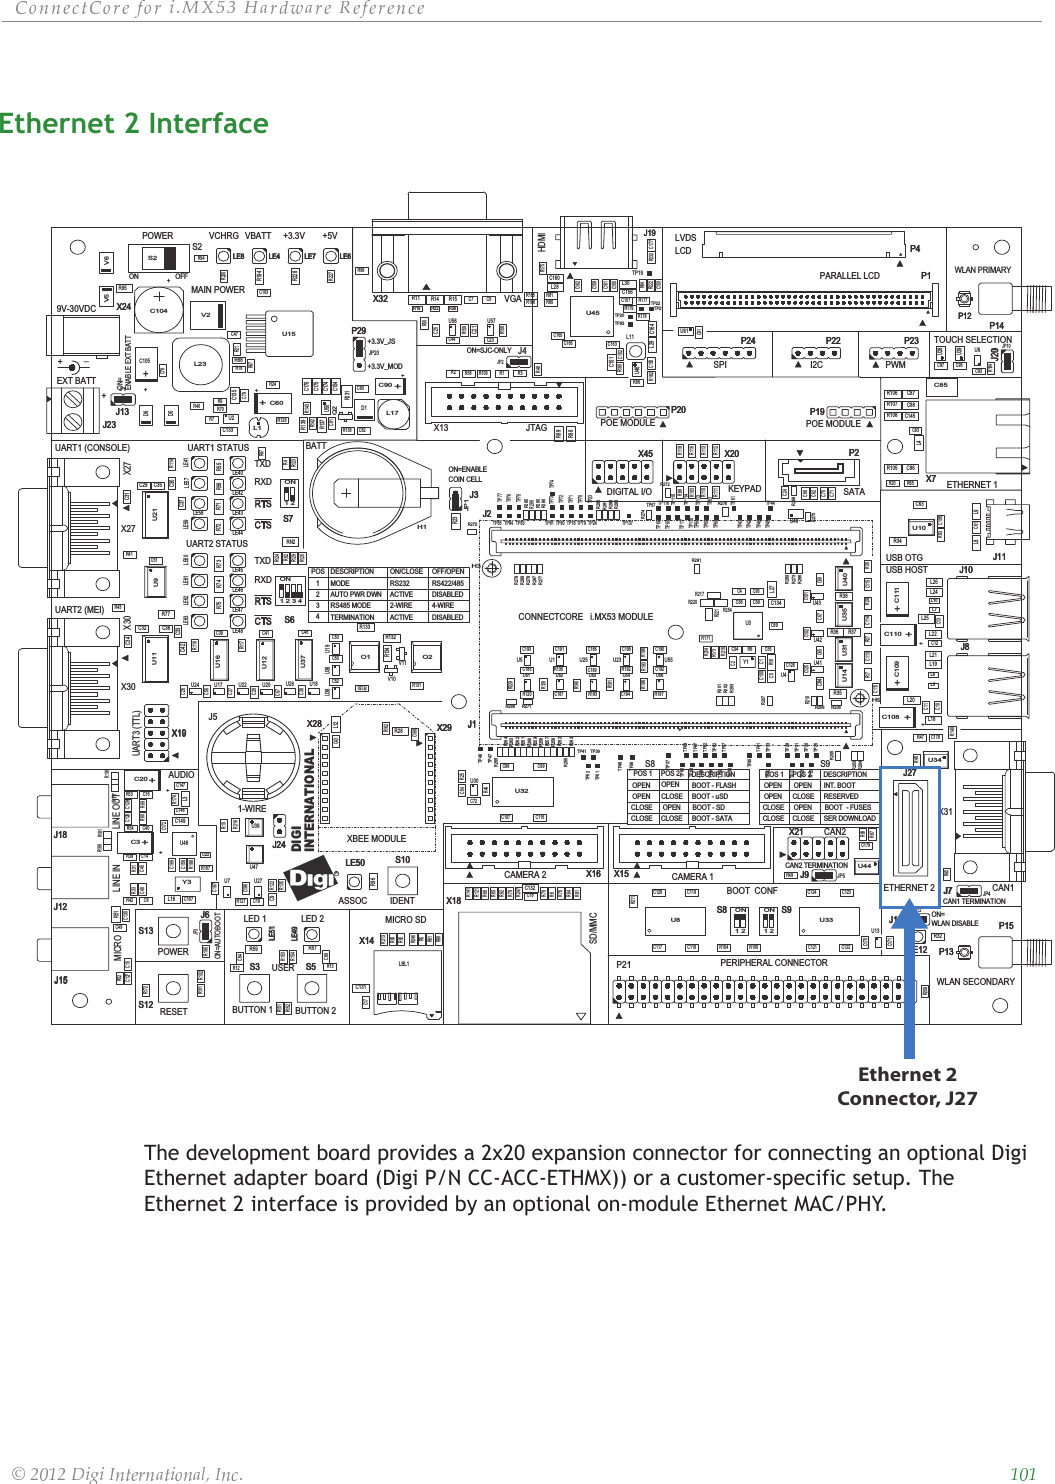 ȱ ȱ ȱ ȱ ȱ ȱȱ ȱ ȱ ȱ ȱȱȱEthernet 2 Interface The development board provides a 2x20 expansion connector for connecting an optional Digi Ethernet adapter board (Digi P/N CC-ACC-ETHMX)) or a customer-specific setup. The Ethernet 2 interface is provided by an optional on-module Ethernet MAC/PHY. RU3U50ON41 32S6ON1 2S7ON1 2S8ON1 2S9S5S3S13S10H9H3D1U21U11Q2U8 U33U32X18P24 P22 P23P29X24J1J2P1P21X19X21X45 X20J24J13J17J6J20J7J9U13U52 U53U51 U54U7U55U56U29U28U61U19U24U38U43U42U41U4U20U22U17U36U18U26U6U2U15JP6JP20JP1JP3JP10JP4JP12JP5J19X32X29X28X7P20J11P19R139J27J10J8L8L26L27L21L19L22L20L25L24L18L28L29L9L12L16L3L4D5V5 V6D6P12P13S12V2X30X27X31X14X16 X15X13U46U10U35U31U14 U40LE59LE62LE63 LE61 LE41LE57LE60LE58LE7 LE6LE4LE8LE51LE49LE40LE43LE42LE44LE47LE48LE45LE46LE12LE50J23P14P15J15J12J18V10V11O1 O2R130R131R51R133R134R28R228R56R71R75R77R74 R55R73R59R72R57R194R96R70R18R132R14R106R108R107R105R15R11+C60+R52R84R41C2C1P2R45R49+C3+R187R189R138R159R188R5R6R7C88C87C145C86R16R42R31R39R33RN2C85R127R8R9R36 R37R34R38R35R95R89R88U37U12U16U45S2C25P4C104+C49C129R53C127C48 C45R182C7 C6L10L6L7L5R142R86+C109++C108++C110++C111+C105++C90+R20R181R176R12 R13R85R94R195R102R101C81C103C120C169C43C53C39C27C159C161C106C46C28C162C57C155R222C163C113 C114 C115C126C101C125 C102C69C100C95C94C59C51C56C41C26C18C50C38C83C55C58C44C89C171C78C166C165C177C84C170C52C196C118C17C123C187C98C167C117C119C79C121C188C191C179R50C99C194C97C122C189C195C158C193C186C124C96C197C80C91C93C178R199C148C147C116C107C190C192C168C112R30R17R93R27 R29R135R122R10U9+C20+R246R247C150Y1C153C22L23R143Y3C151C164R23C132C134C160C131C176C175C154C174C135C133C149C70C13C12C47C61C11C71C10C62C66R118R172R4R123R61R62R63R90C23R48R117R64R76R78R141R66R79R121R65R92R91R217R21R221R100R211R110R103R99R113R2R111R126R119R25R184R104R112R1R116R220R254R154R153C157C54R137L17J5U48U47U39U34U44U25U1 U23U27U5R231R204R205R218R208R289R275R274R278R287R273R261R269R206R253R202R281R203R285R290R277R284R266R257R280R282R258R259R260R276R268R22 R26R19R286R283R201R262R263C128R256R265R264R207R271R158R288R272R279R291R177R213R175R179R43R178R140R209R180R232R44R47R98R58R83R24R46R270R40R174R87R109R114R3R97R129R82R124R125R152R68R151R191R227R32R193R190R196R136R230R183R192R128R120R198R229R197R162C82C37C35C15C65 C67 C68C36C4C5C42C29C32C34C33C64C31C156C9C63C19C30C8C14C172R81R80R186R185R67R216C152C130L11L1U57LBL1J4R173R214C24JP2R292C16R69R60L30R215R171U49C21U30J3C72H1R255R293U58R54 C40TP83TP85TP61TP90TP114TP67TP66TP115TP69TP116TP71TP117TP74TP78TP80TP63TP118TP64TP22TP21TP20TP19TP46TP72TP45TP60TP43TP84TP42TP79TP65TP73TP113TP137TP70TP23TP24TP81TP47TP48TP77TP76TP75TP93TP38TP49TP52TP51TP39TP41TP25TP82TP89TP87TP62TP29TP30TP31TP28TP91TP33TP35TP57TP26TP37TP88TP86TP68TP58TP36TP92TP27TP44X14J17 P15S8CAN2SATAPWMON=WLAN DISABLEJ19J12POWERX27ON=P29S9S9S5_I2CX21CLOSERXDJ1+3.3V_JSSER DOWNLOADJ18+3.3V_MODDIGIJTAGS8IDENTDISABLEDUSERP22+LINE OUTUART3 (TTL)AUTO PWR DWNJ13+VCHRGON/CLOSEP4RESERVEDCAN1 TERMINATIONTXDCLOSEUART1 STATUSX30OPENP12UART2 (MEI)LE51ETHERNET 1SD/MMCOPENX209V-30VDCSPI3LE49X15RS485 MODE+5VDESCRIPTIONVBATTJ81DISABLEDJ10MAIN POWEROPENP24J11LE8BOOT - SATAACTIVEPOS 1OPEN4BUTTON 12-WIRES6LVDSLCDOFF/OPEN4-WIREACTIVEX32POSINT. BOOTVGADESCRIPTION2MICRO SDX28WLAN PRIMARYJ27ON=ENABLECOIN CELLX45MICRO1-WIREJ15INTERNATIONALETHERNET 2LE50CAN1WLAN SECONDARYPOS 2J9P1OPENX29J24LED 2LE4X18S13PARALLEL LCDS3S12XBEE MODULEOFFP2J2ON=AUTOBOOTJ20i.MX53 MODULEPOS 1J7CLOSE OPENRXDCLOSEUART2 STATUSBOOT  - FUSESX16RESETTERMINATIONP14LINE INHDMIX19CLOSEASSOCCLOSE CLOSEBOOT - FLASHPOS 2LED 1CAN2 TERMINATIONS7OPENX7BOOT - uSDBOOT - SDJ6BUTTON 2J23P23S2LE6LE7S10KEYPADMODECAMERA 2RS232CONNECTCORERS422/485EXT BATTENABLE EXT BATTX24TOUCH SELECTIONDESCRIPTIONONUART1 (CONSOLE)+3.3VPOWERLE12CLOSEDIGITAL I/OTXDPERIPHERAL CONNECTORCAMERA 1BOOT  CONFUSB OTGUSB HOSTON=SJC-ONLYAUDIOJ3POE MODULEP19POE MODULEBATTOPENP20P13Ethernet 2Connector, J27